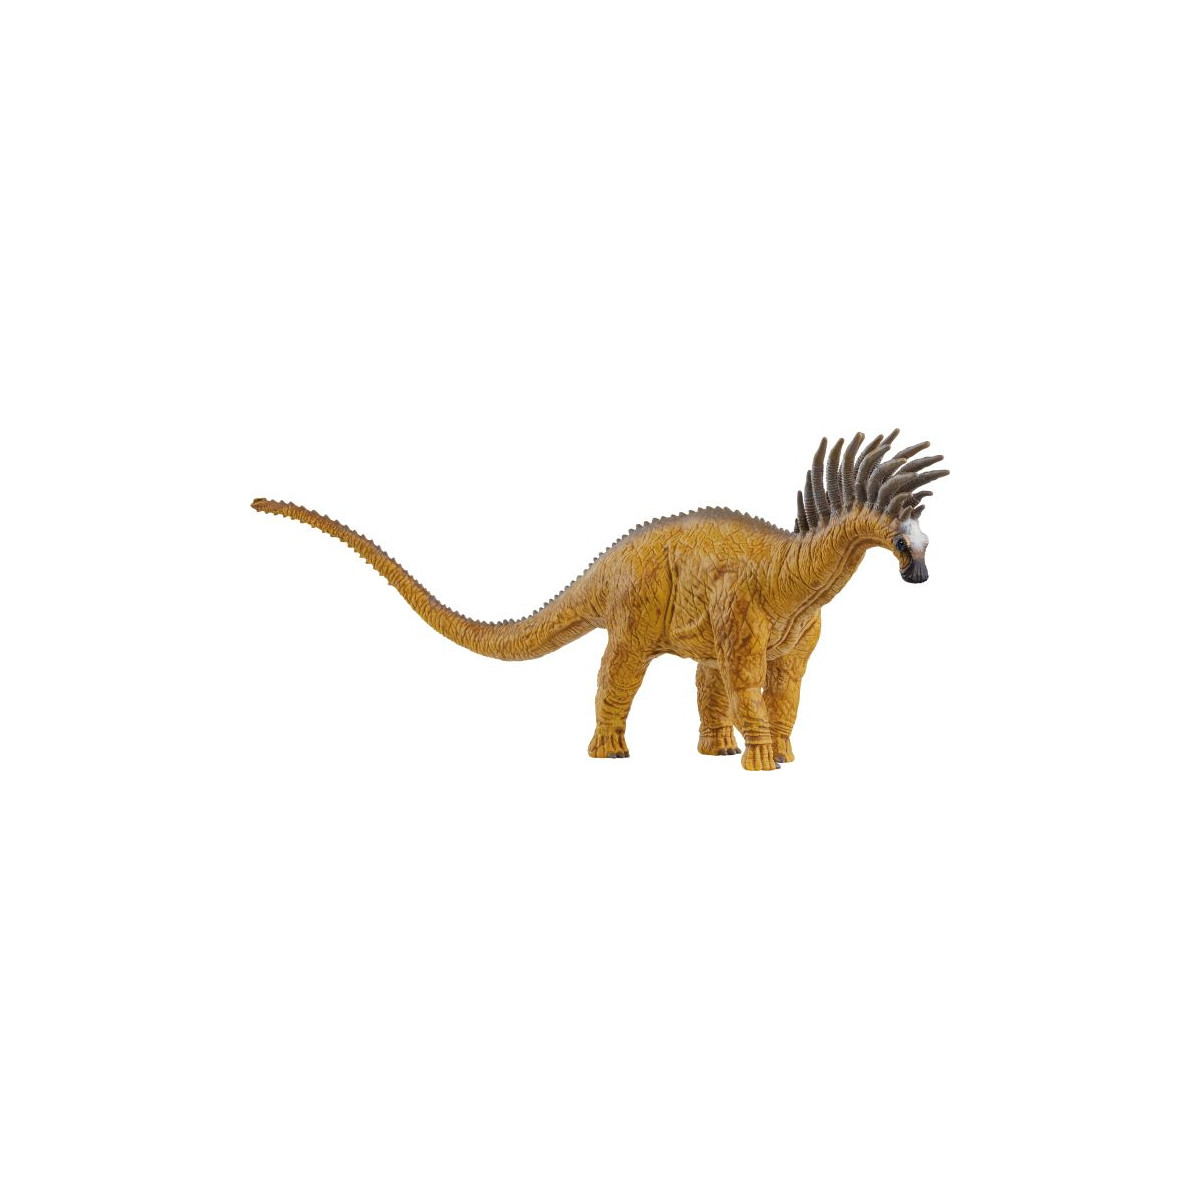 Bajadasaurus